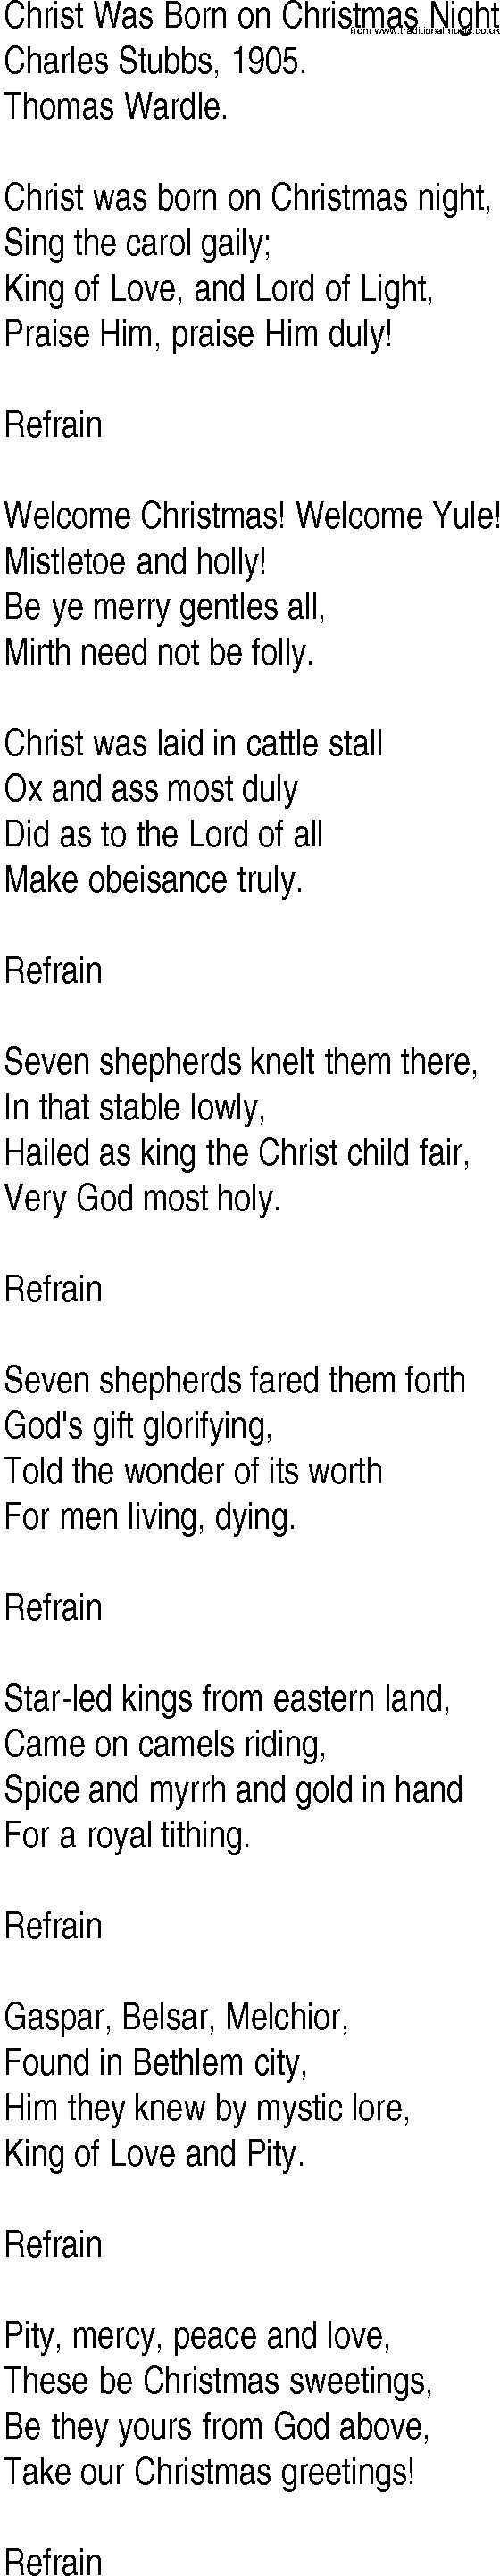 Hymn and Gospel Song: Christ Was Born on Christmas Night by Charles Stubbs lyrics